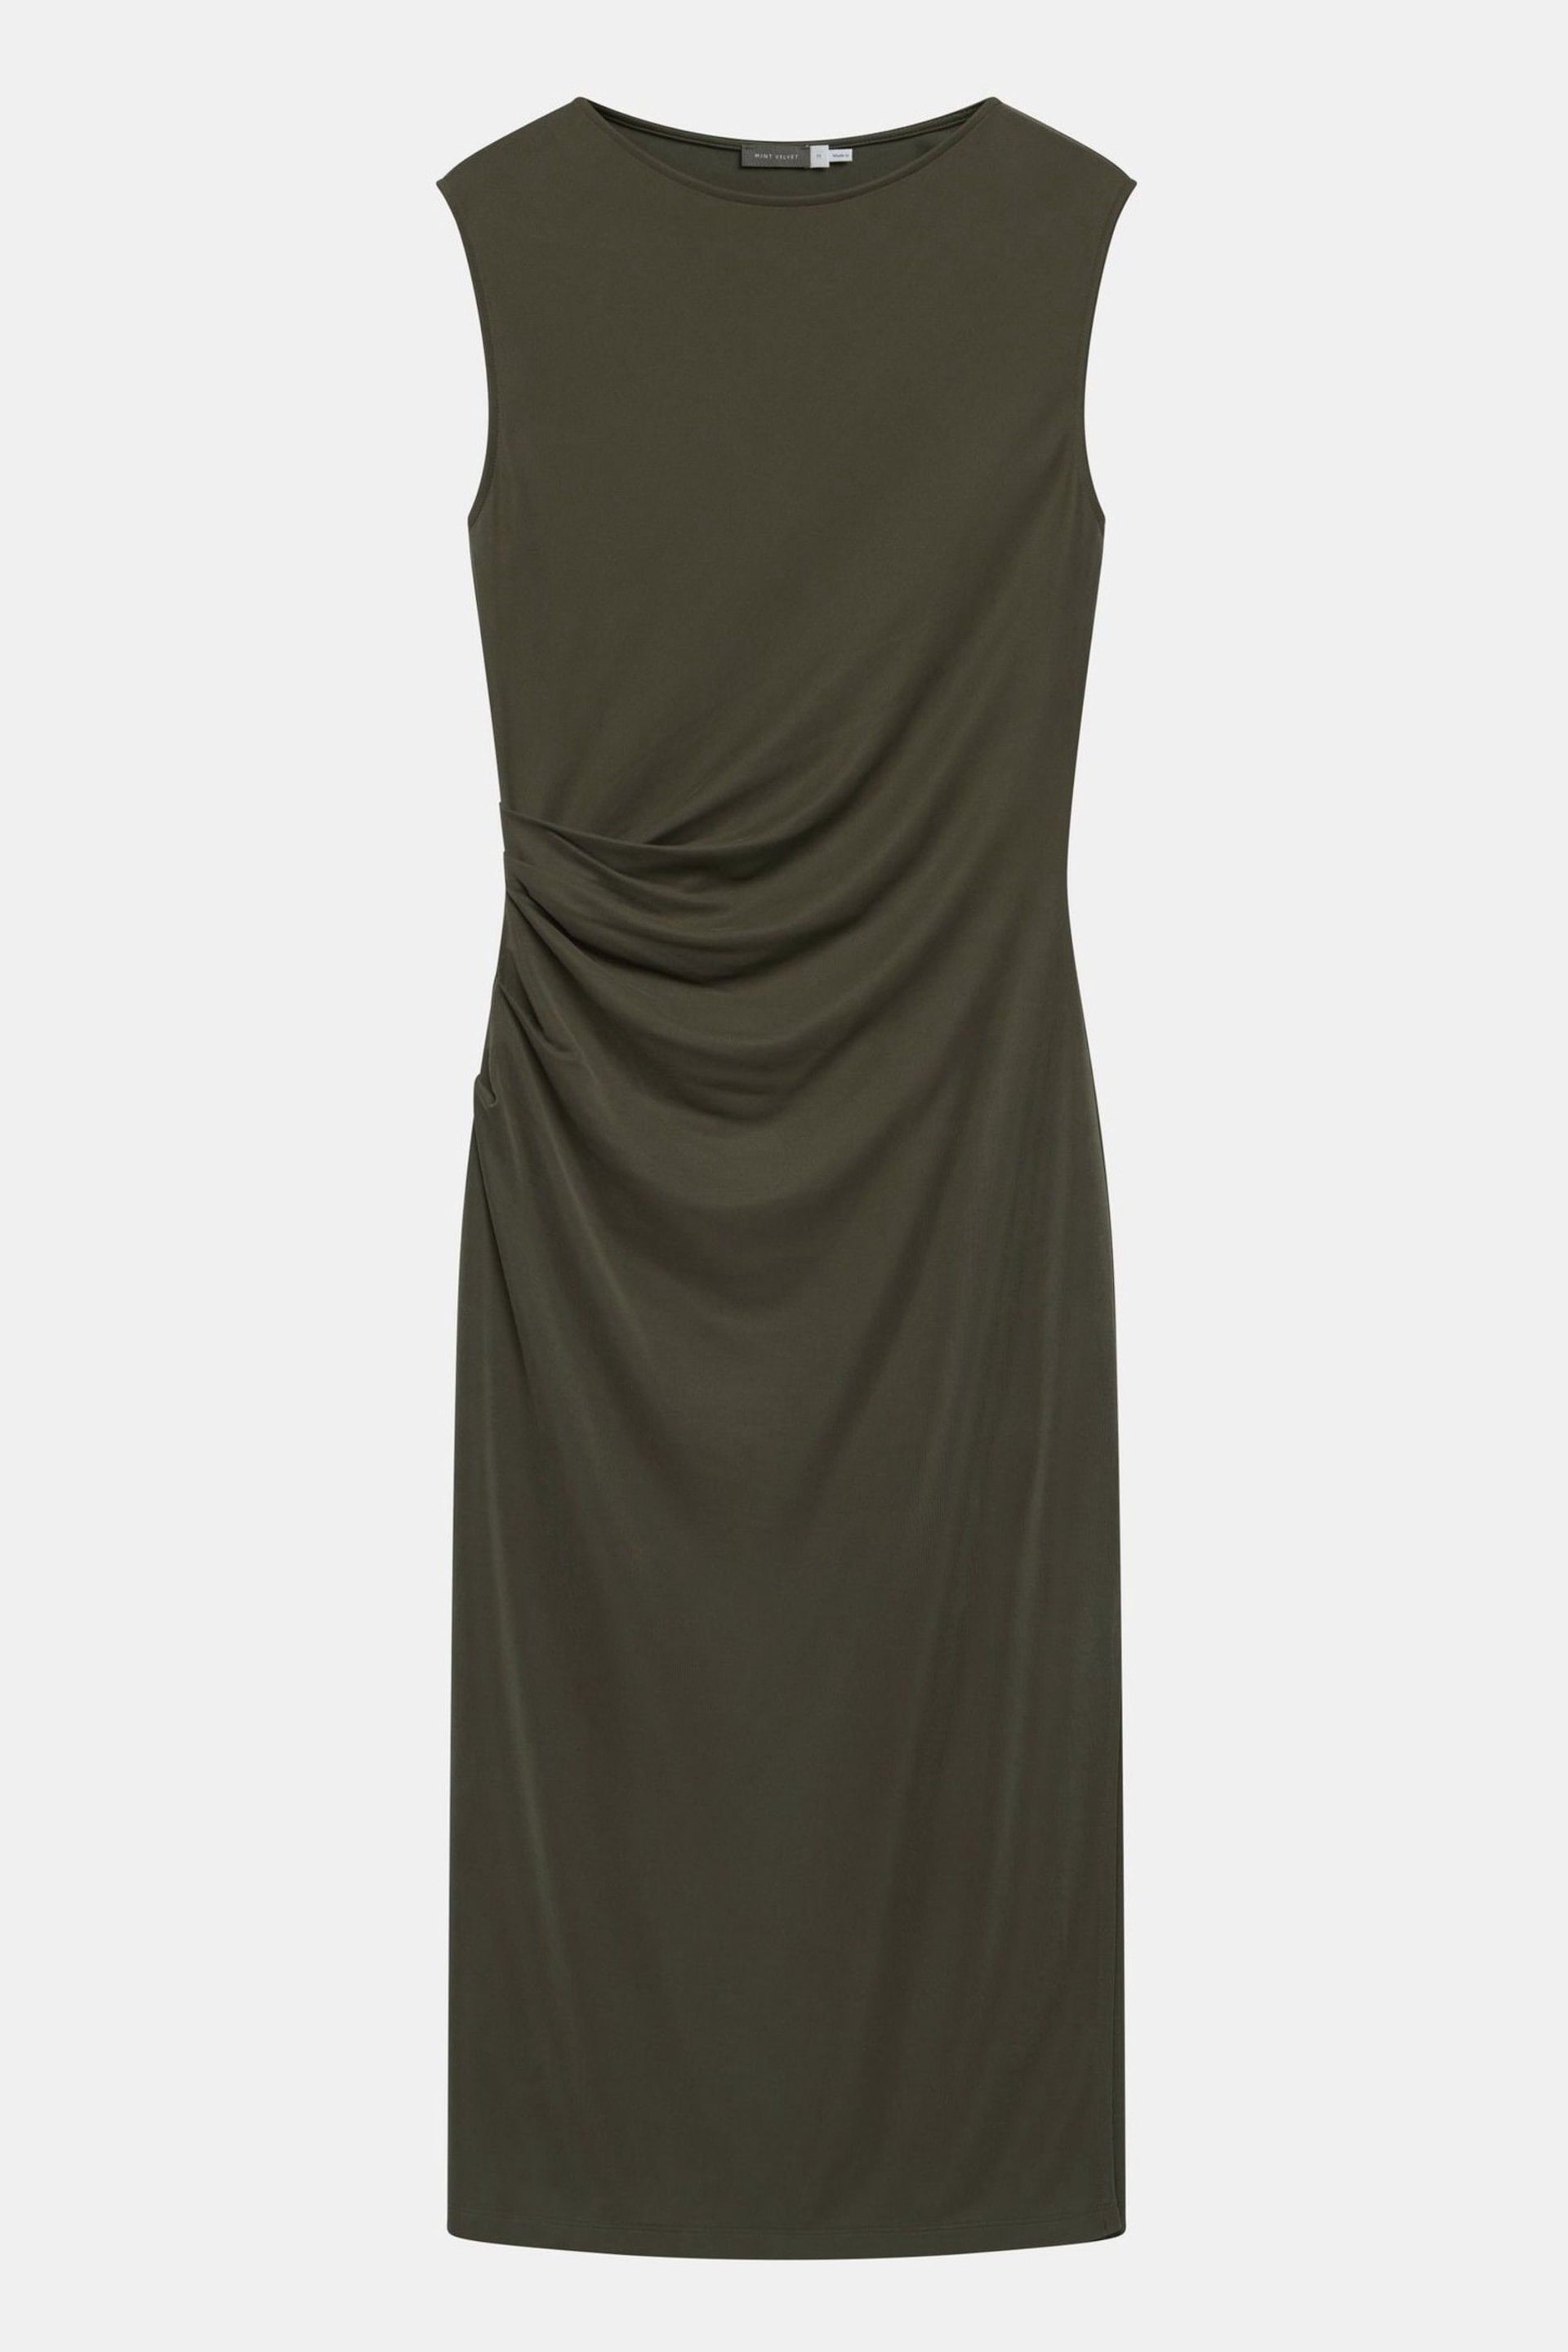 Mint Velvet Green Khaki Jersey Midi Dress - Image 3 of 4